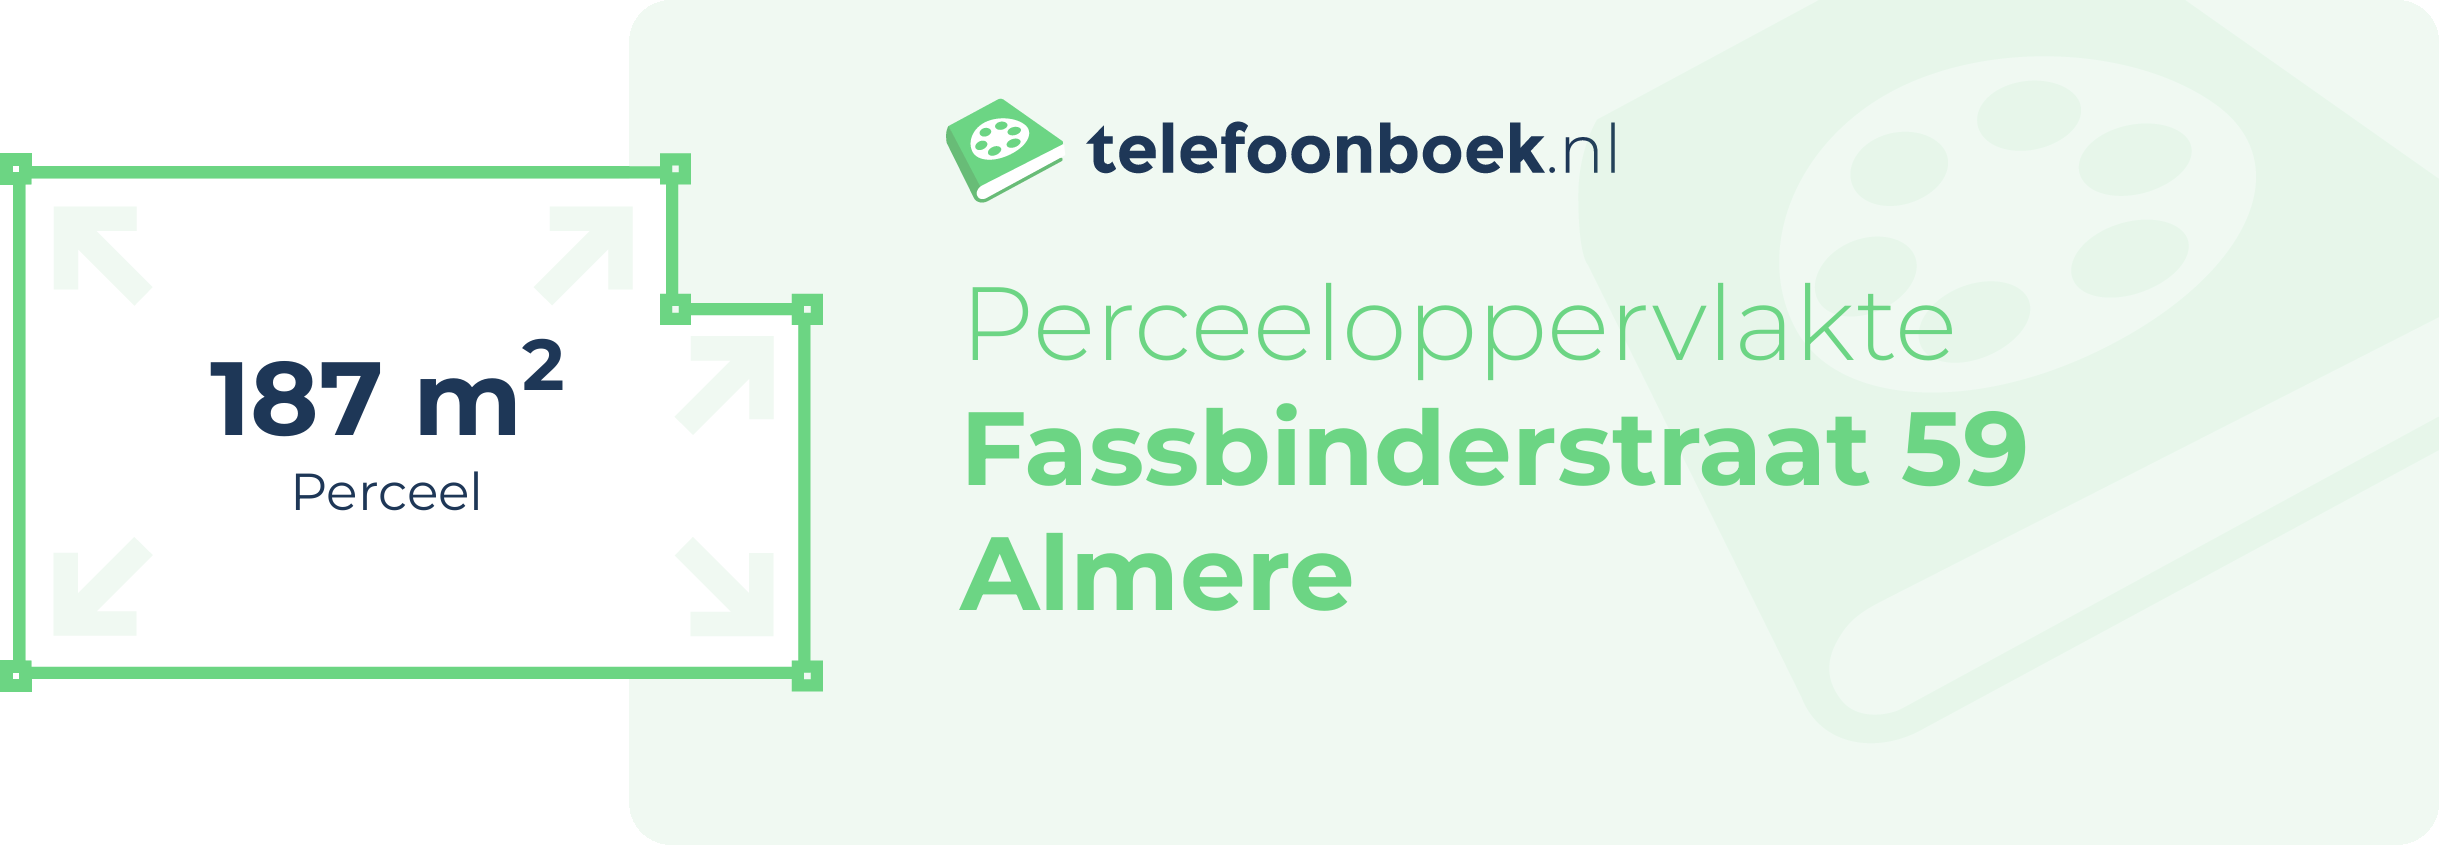 Perceeloppervlakte Fassbinderstraat 59 Almere